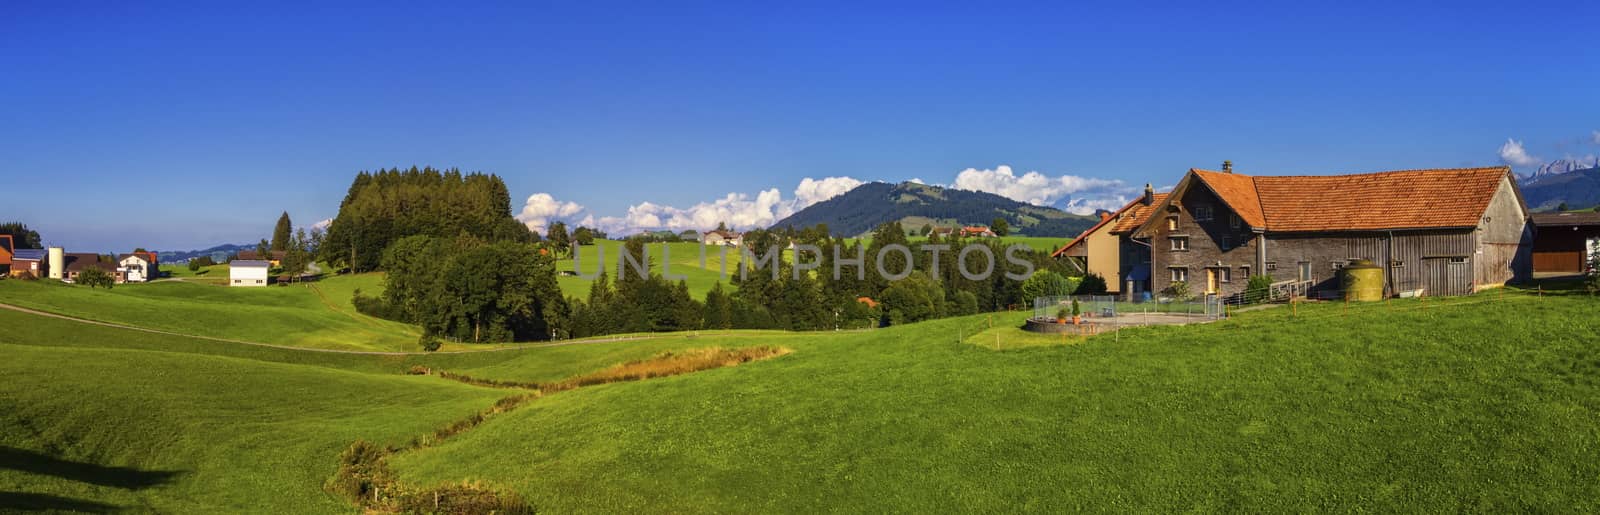 Appenzell landscape, Switzerland by Elenaphotos21